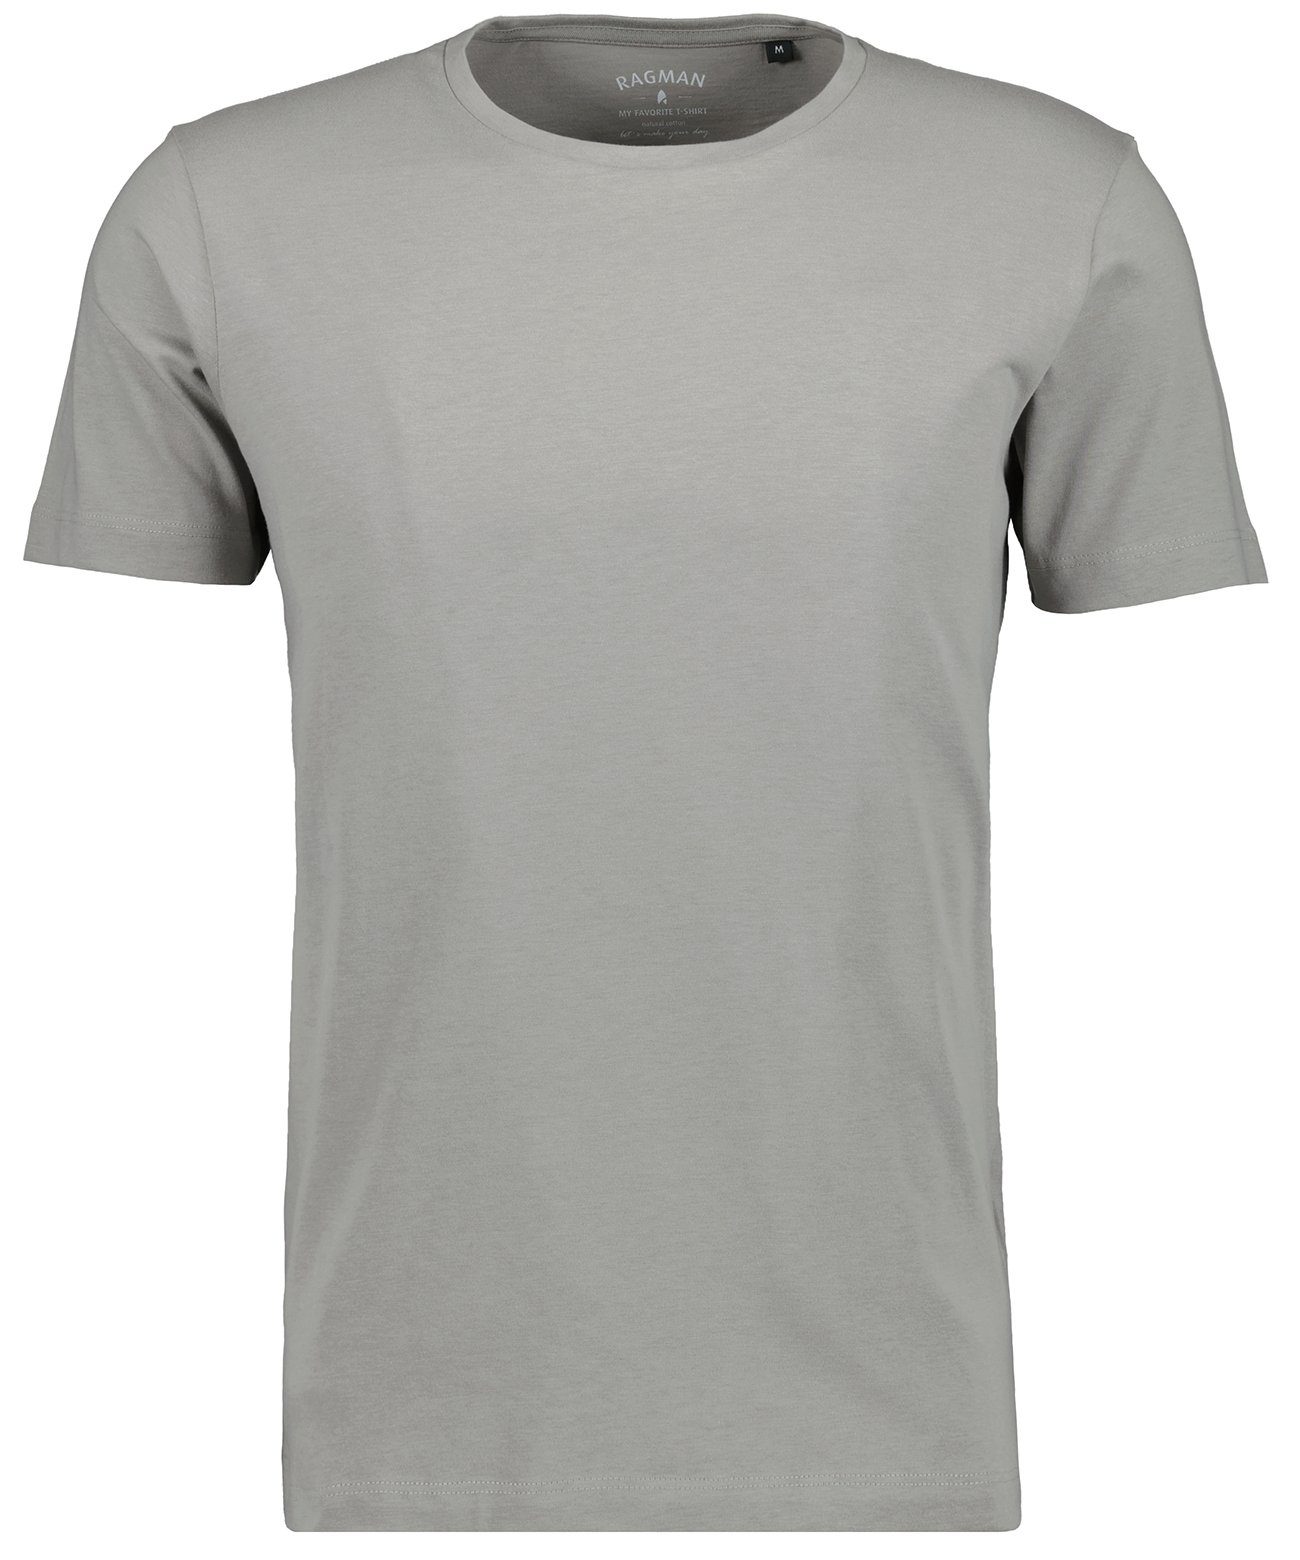 RAGMAN T-Shirt Grau-Beige-215